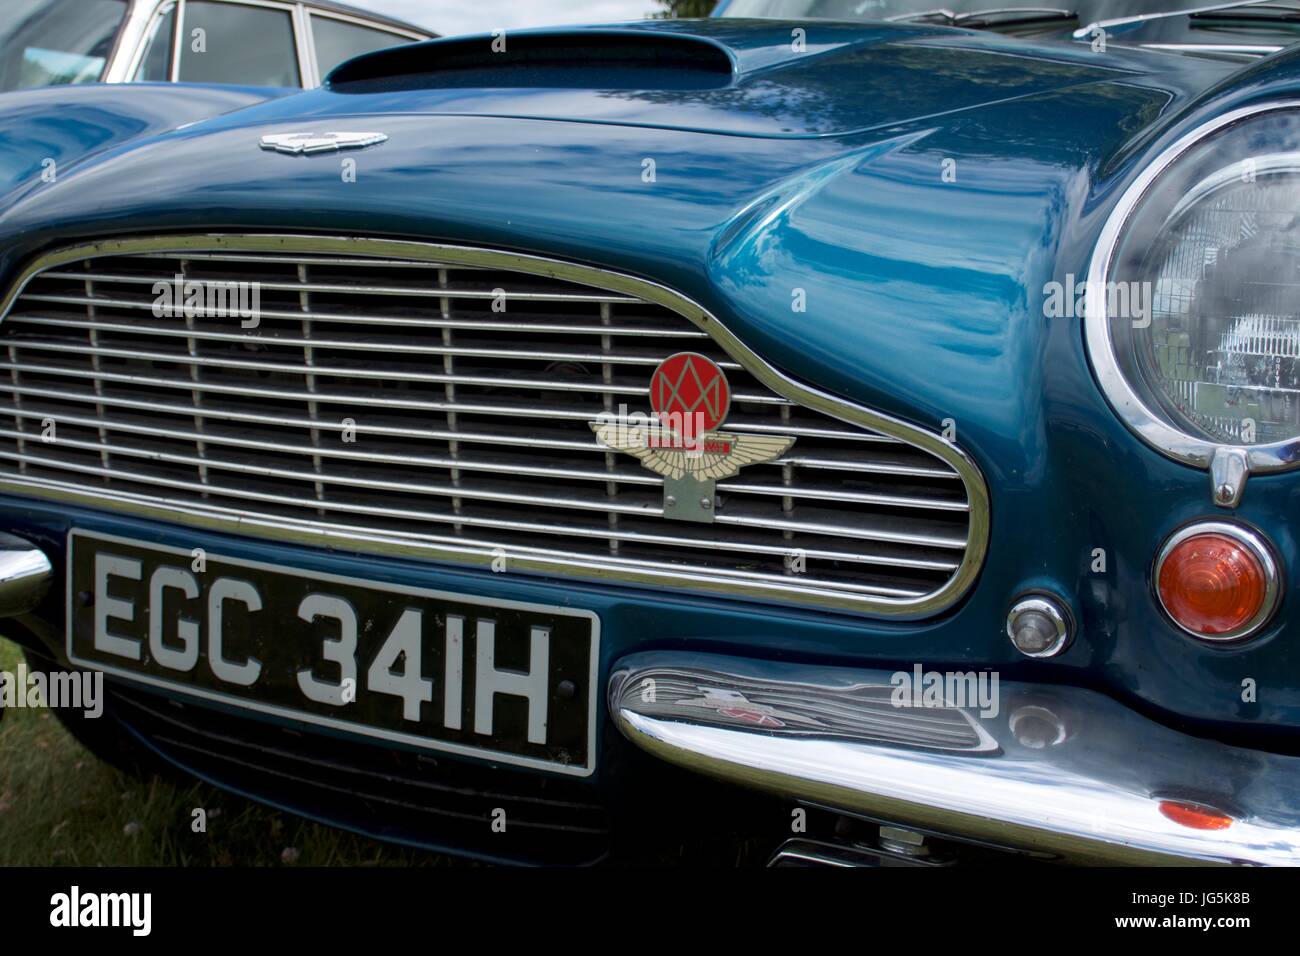 Aston Martin winged logo badge on grille of blue vintage car Stock Photo